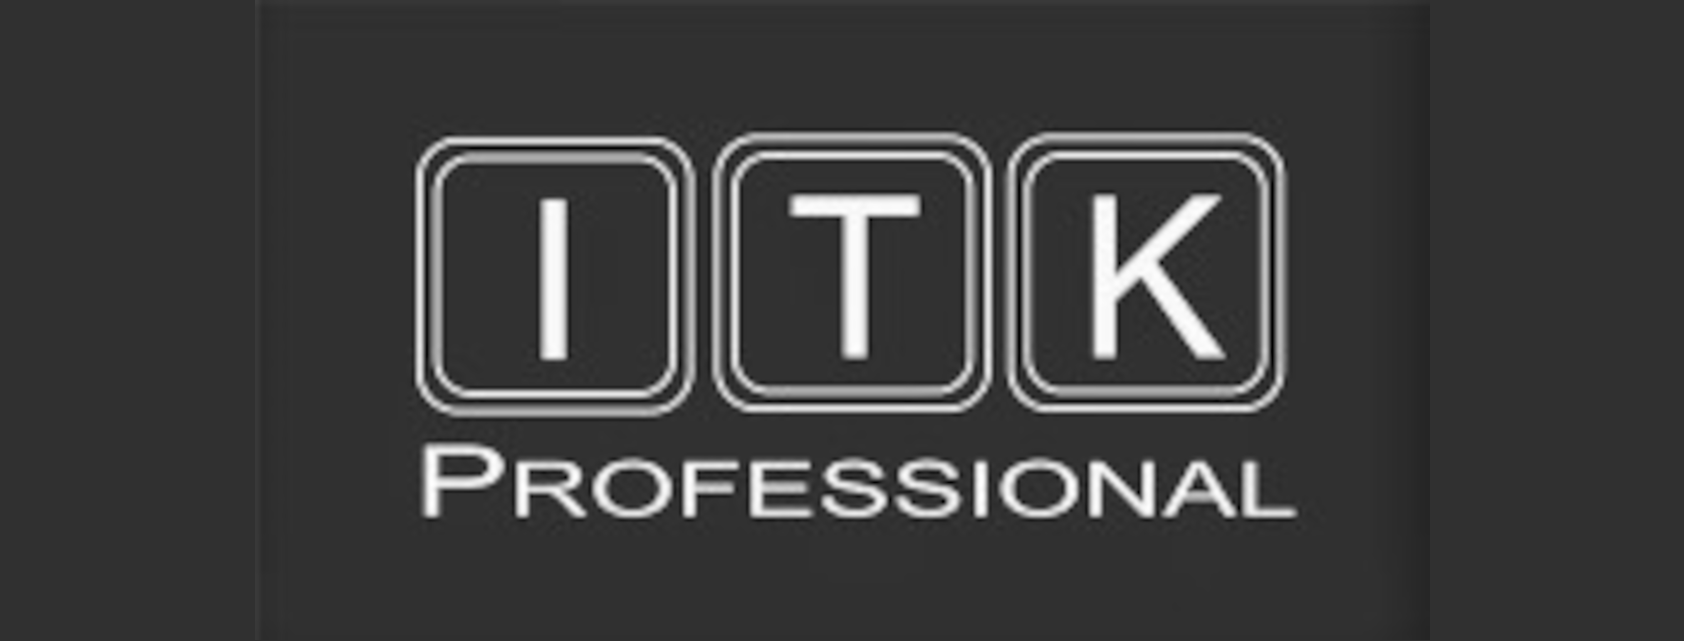 Logo ITK blk full